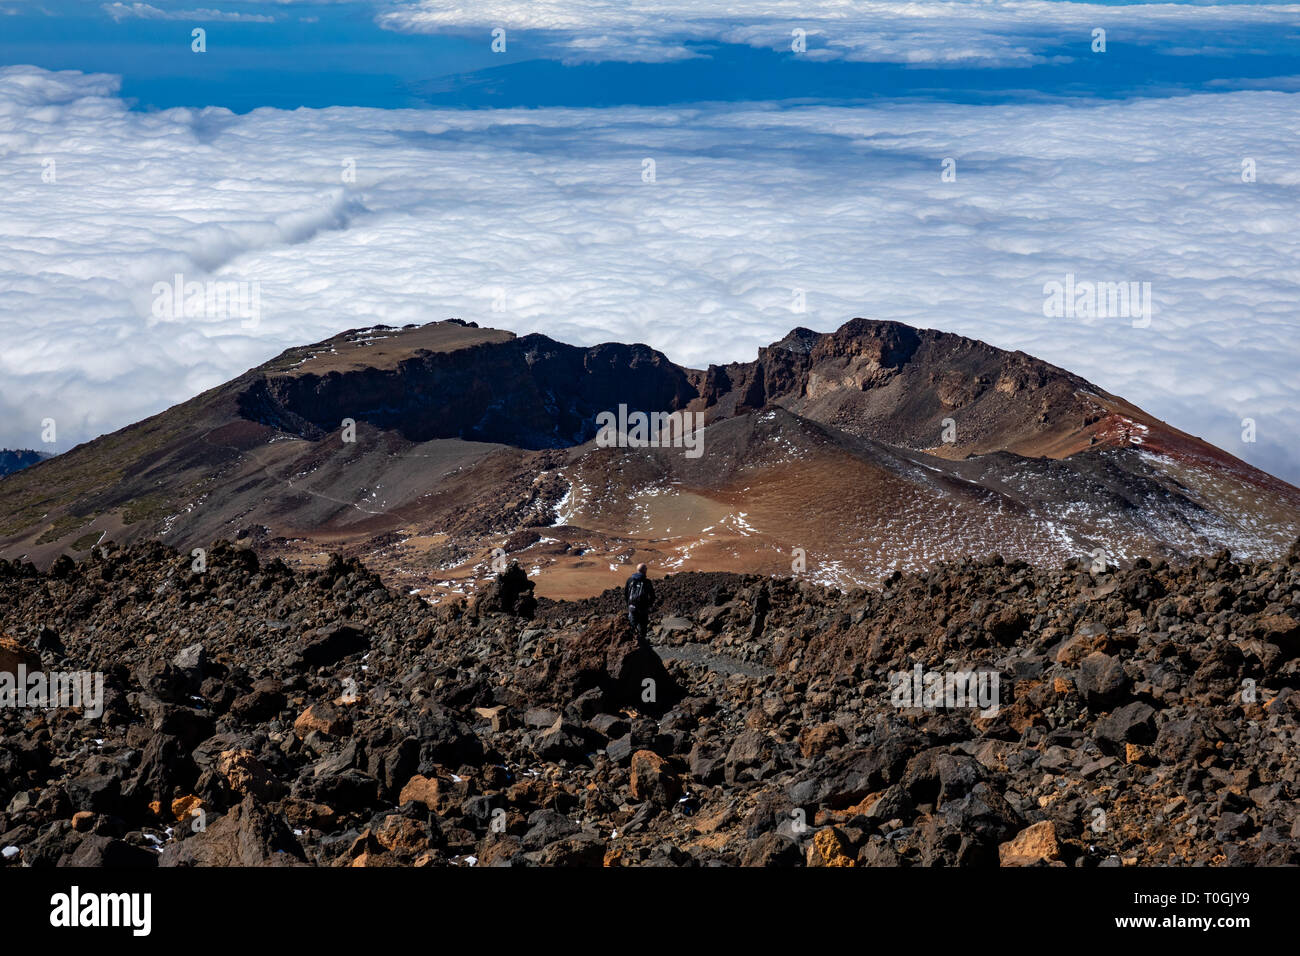 Pico viejo volcano crater in Tenerife island Stock Photo